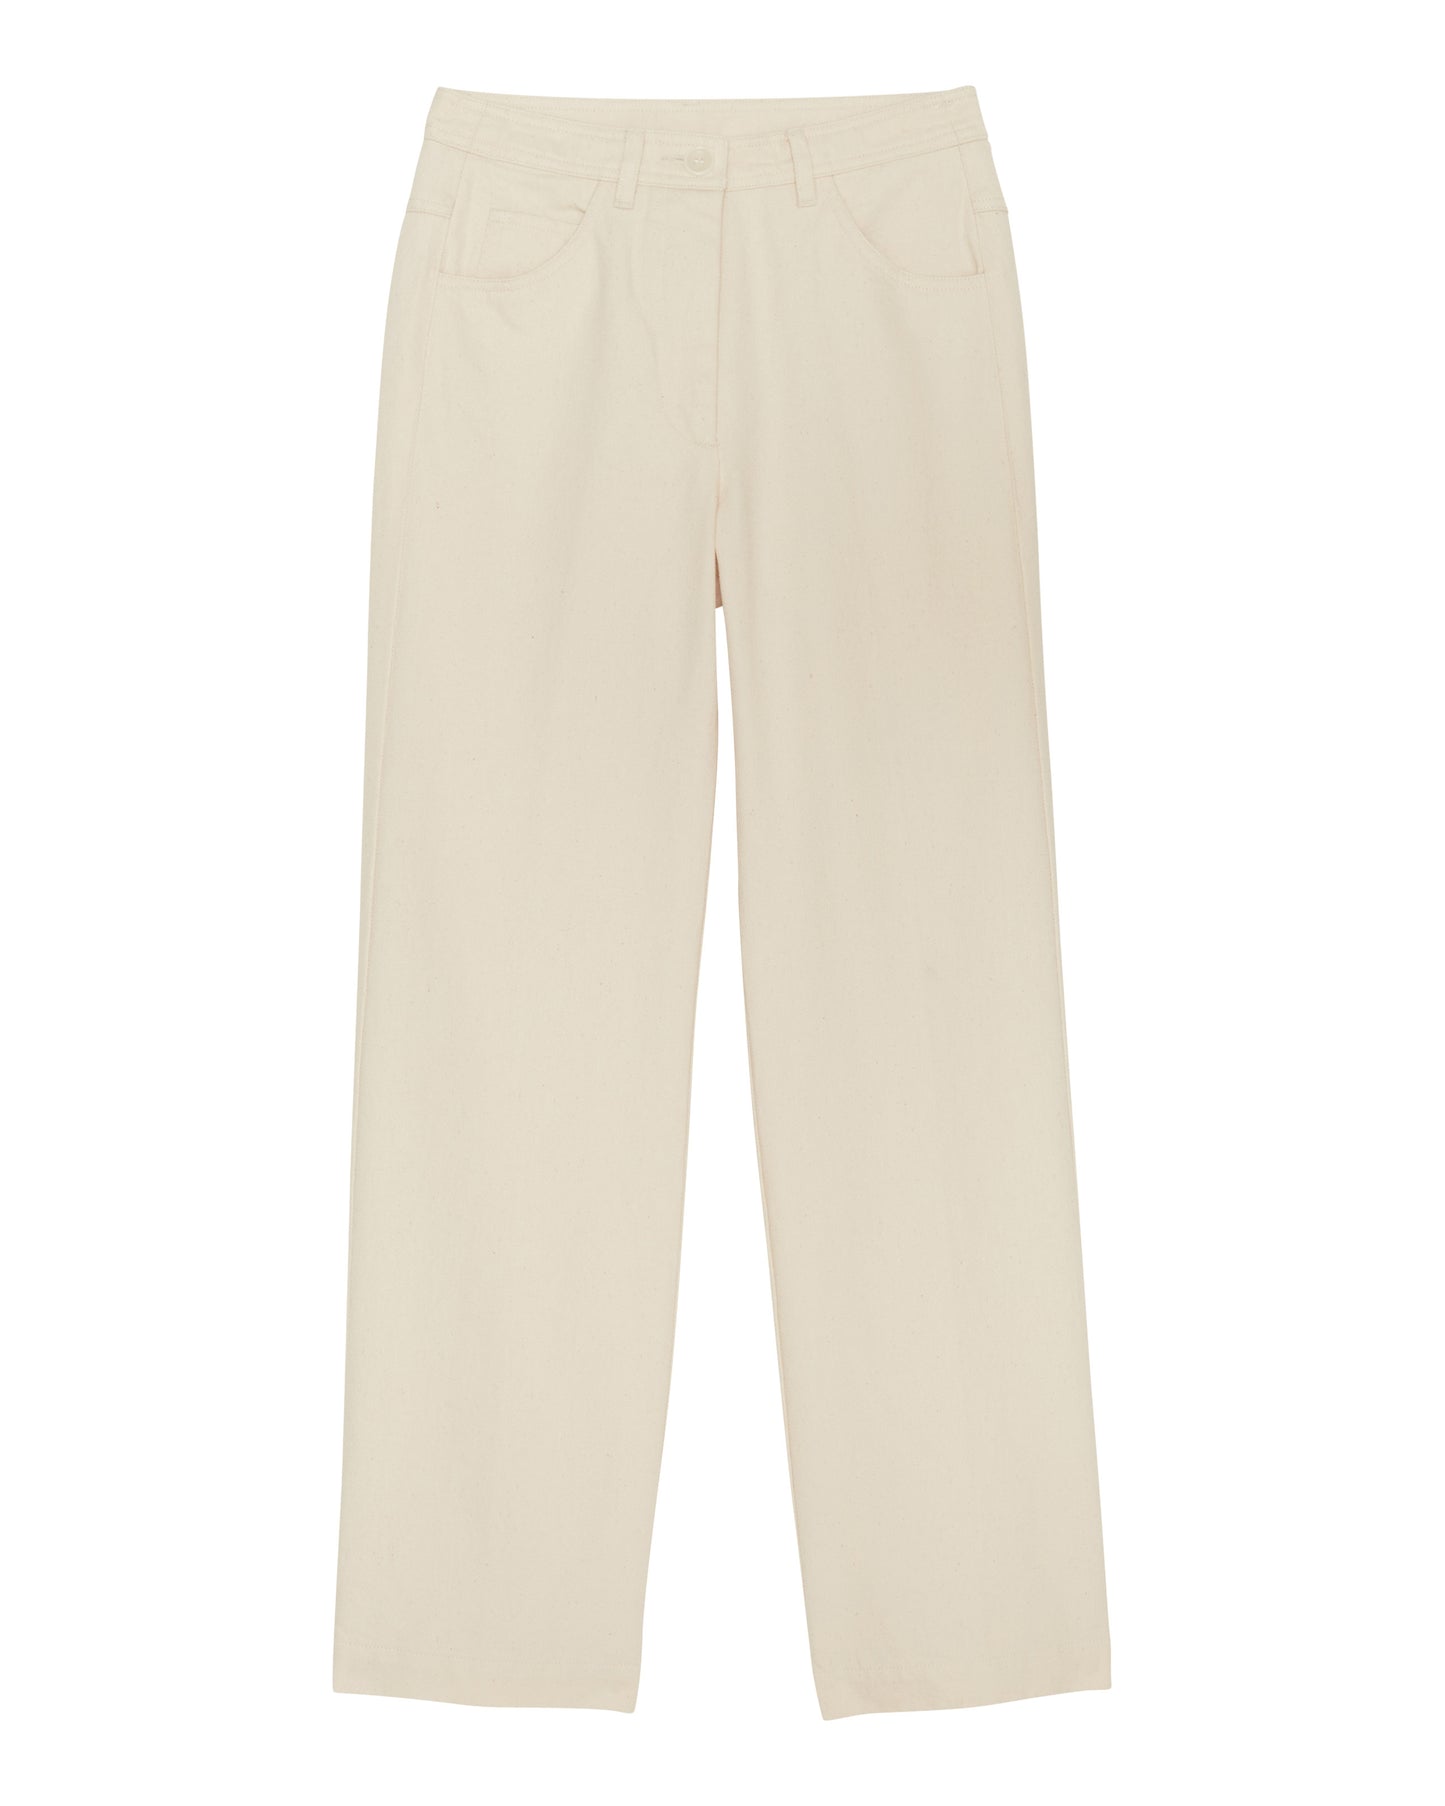 Pantalon Fille en sergé de coton Ecru Pad BBPDA612-01